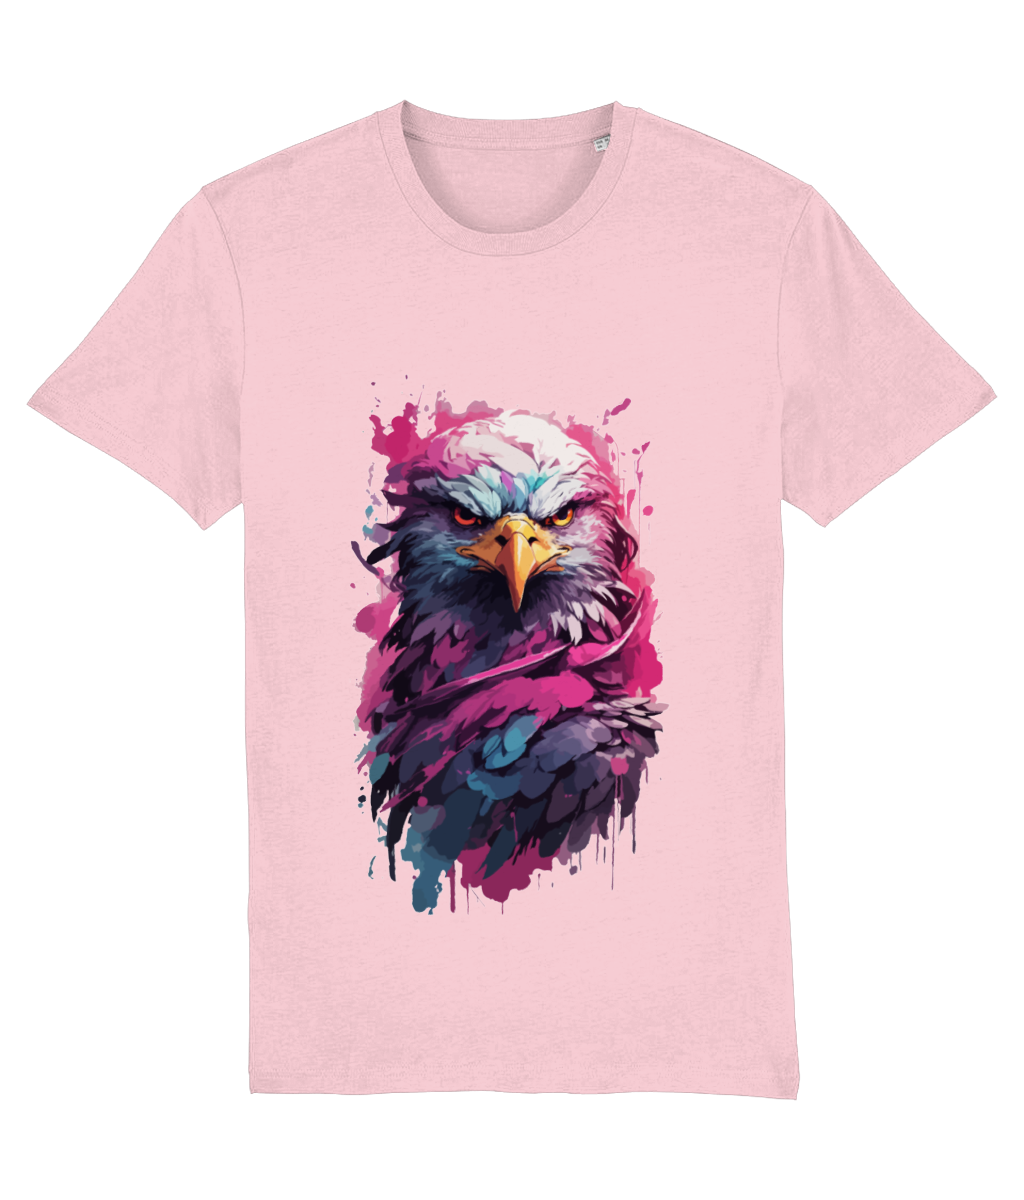 Arty Owl Print T-Shirt